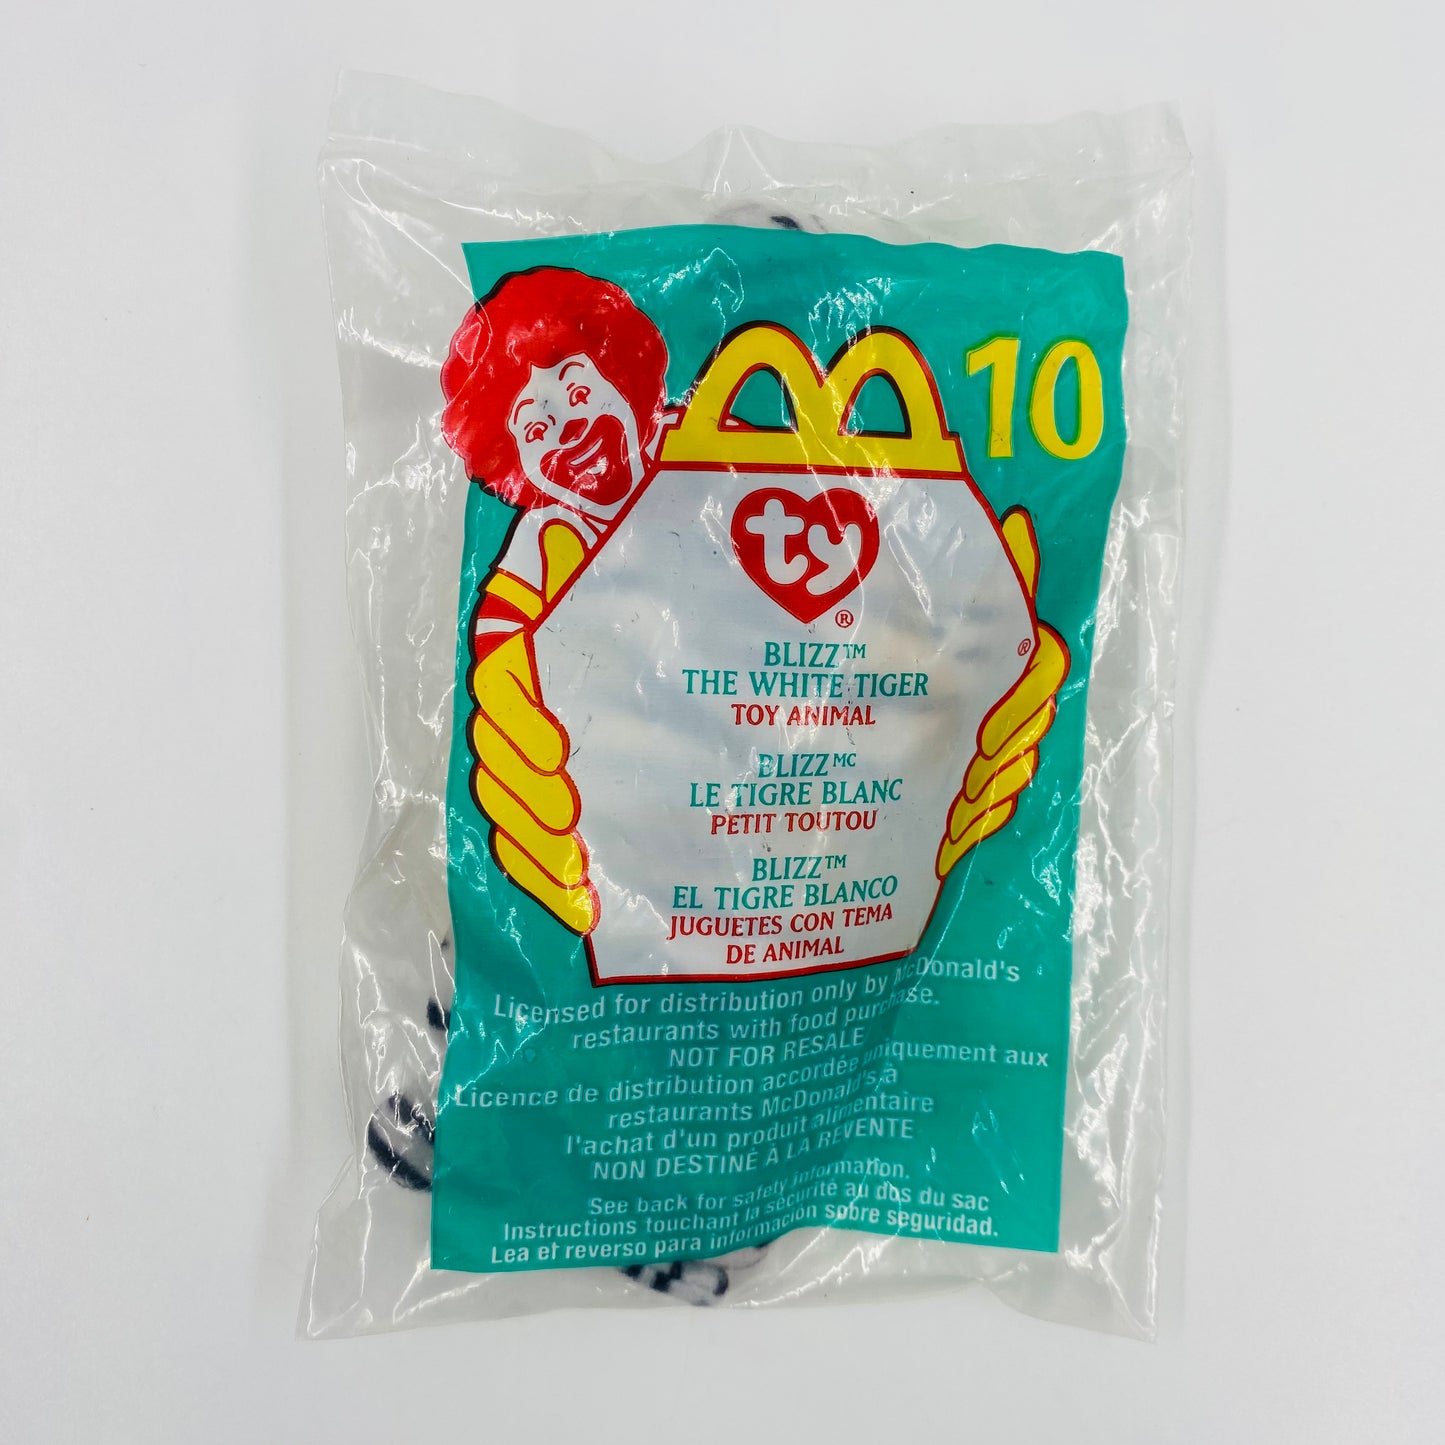 Teenie Beanie Babies Blizz the White Tiger McDonald's Happy Meal bean bag plush toy animal (2000) bagged